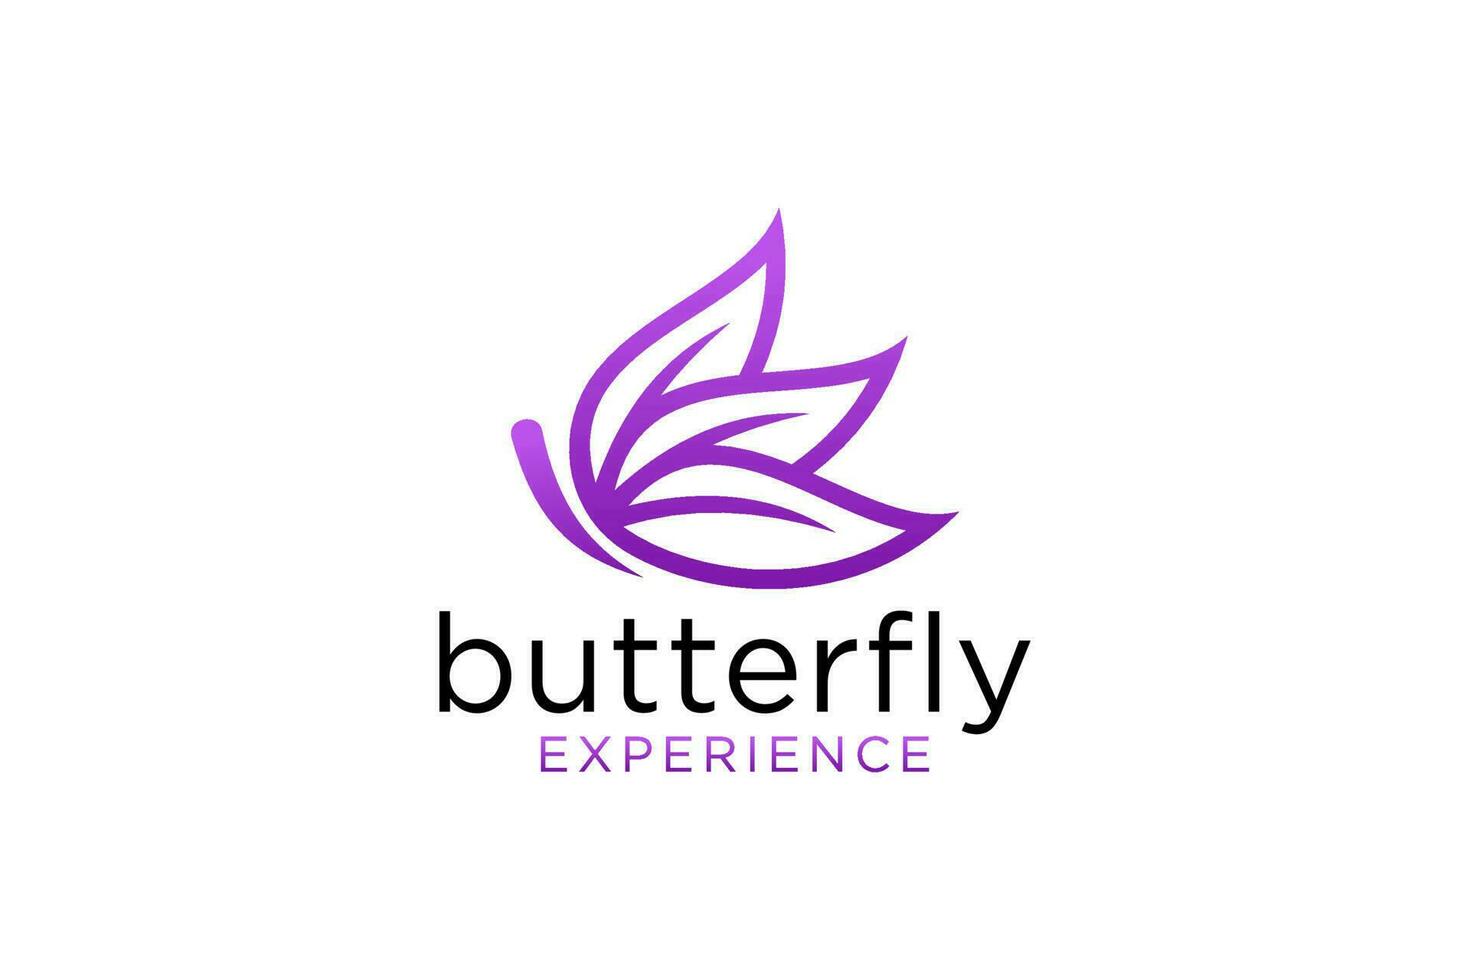 Butterfly logo. Luxury line logotype design. Universal premium butterfly symbol logotype. vector